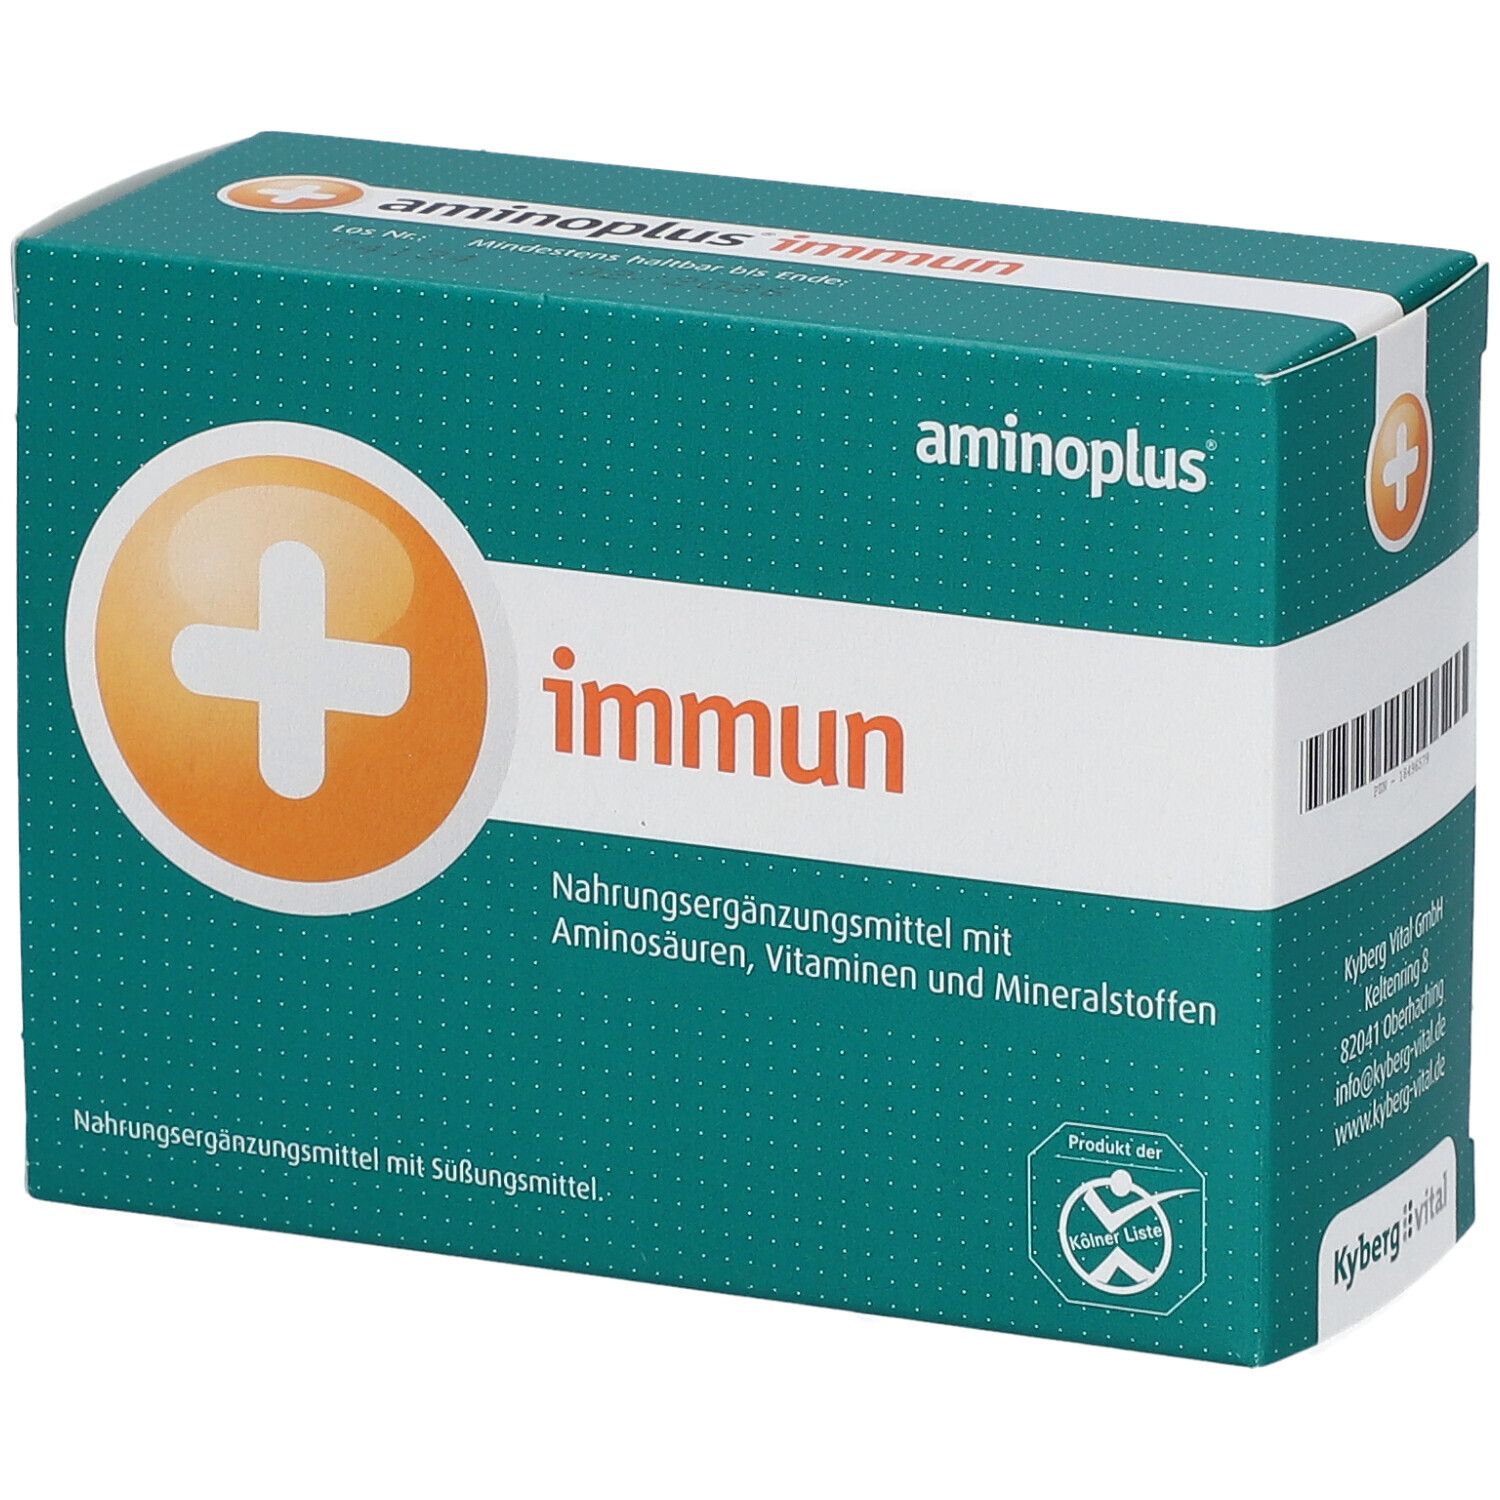 Aminoplus®immun